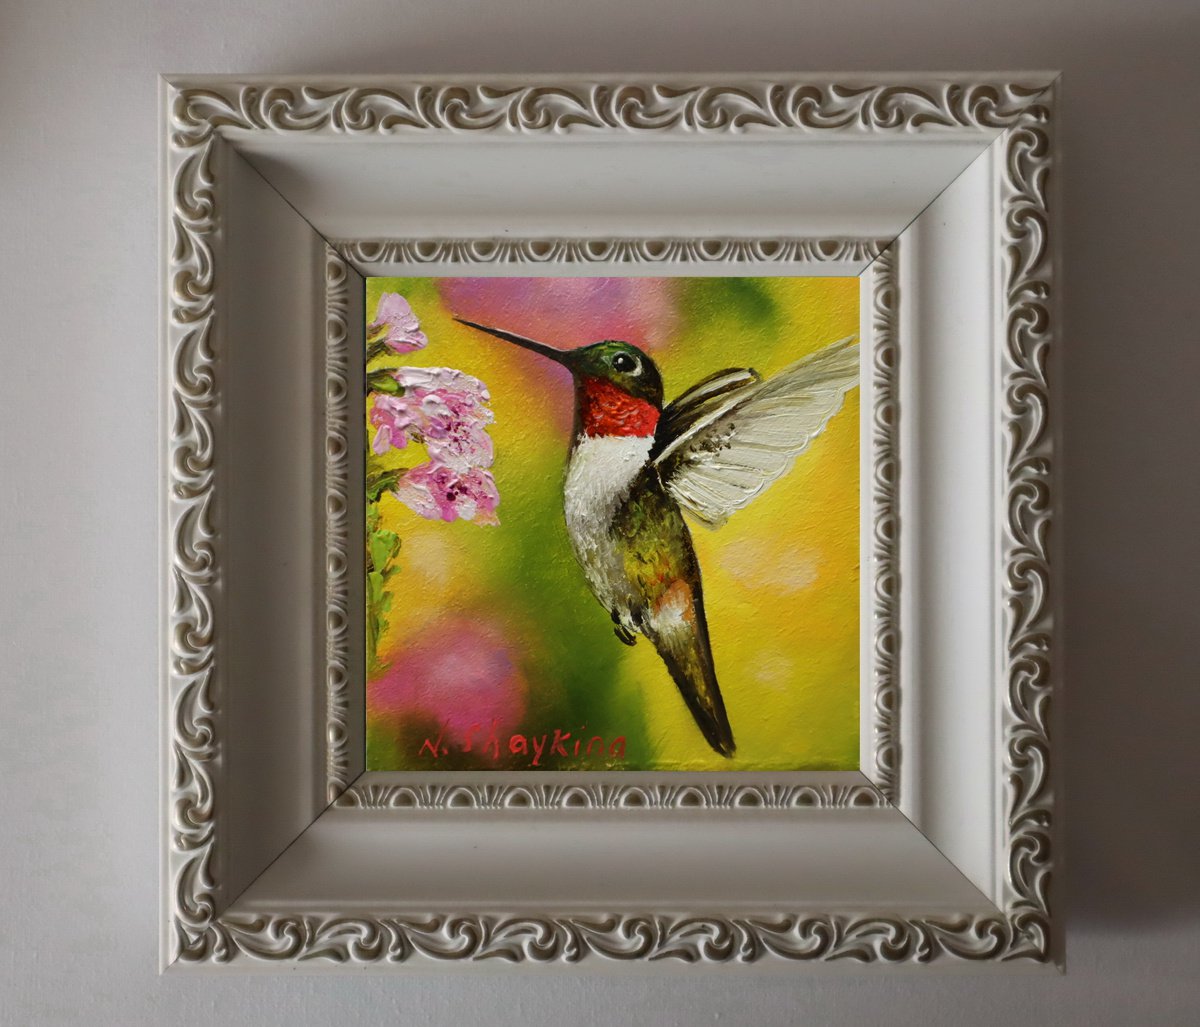 Original Painting of Hummingbird, Artwork framed 4x4 (10x10 cm) by Natalia Shaykina